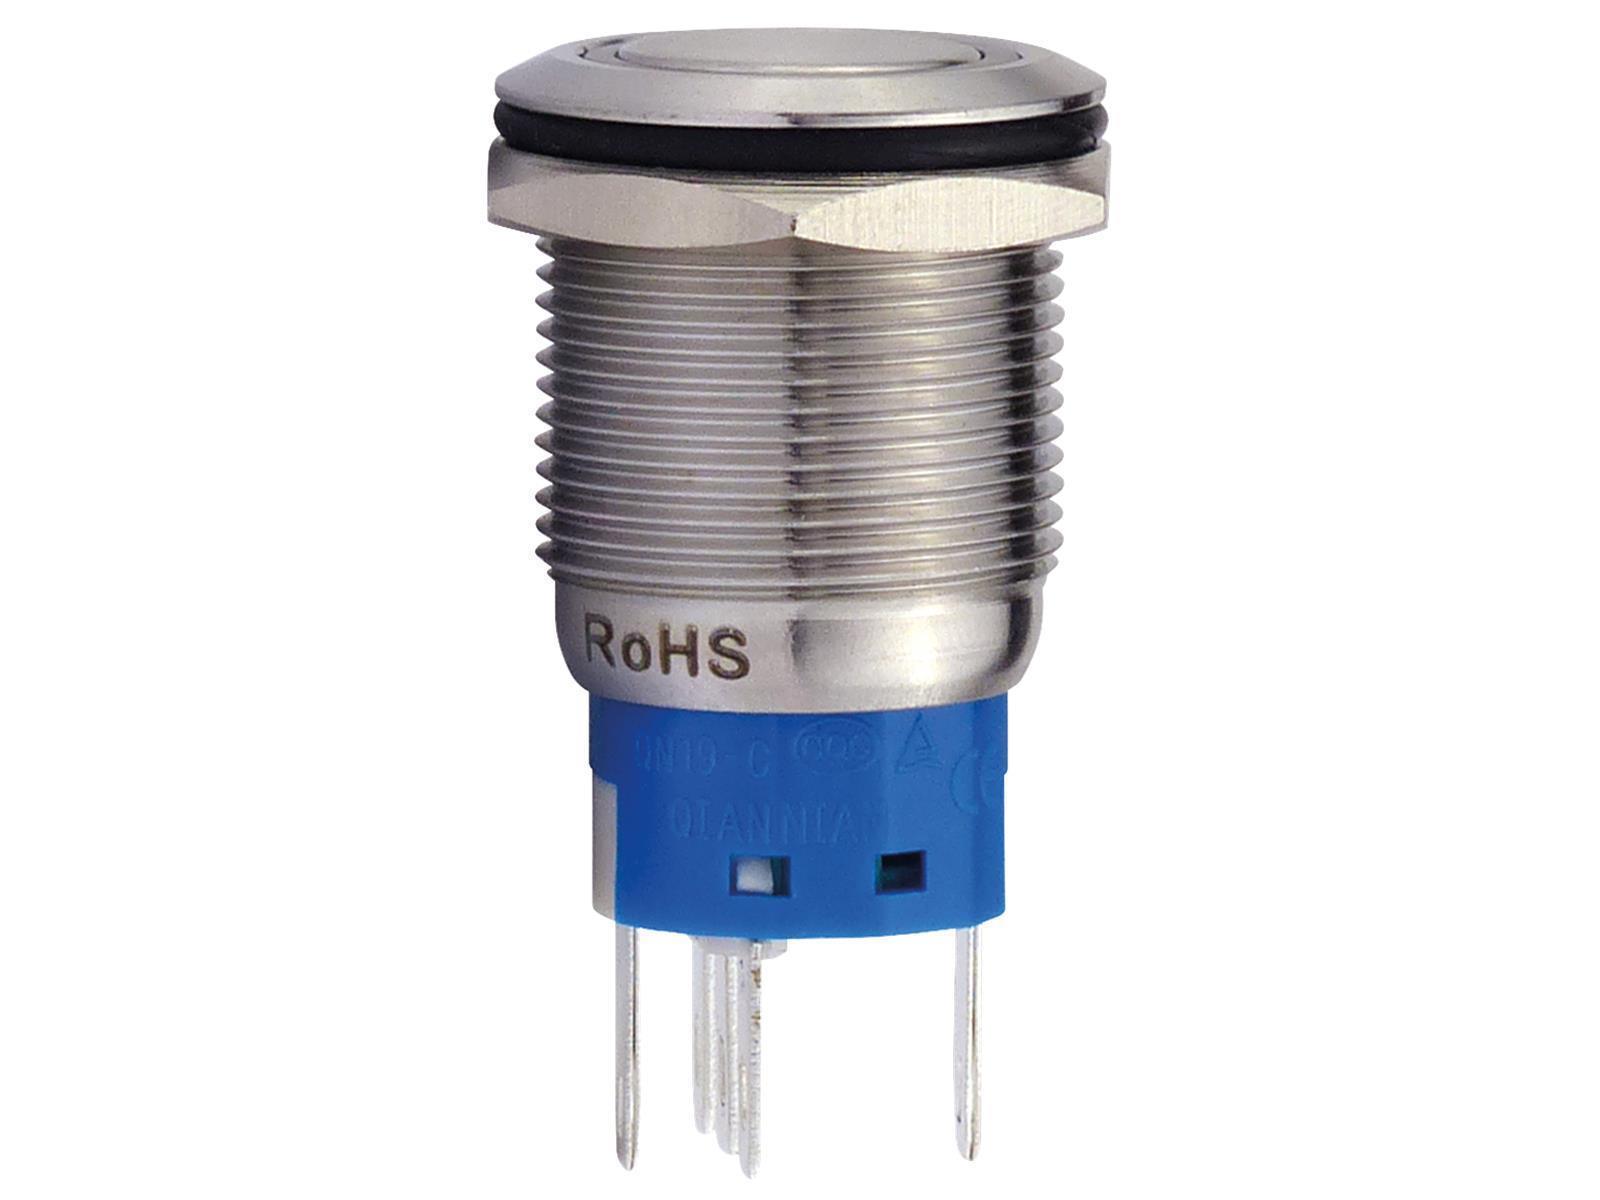 Vollmetalltaster mit Ringbeleuchtung, blau, 19mm-Ø, 250V, 5A, Lötanschluss